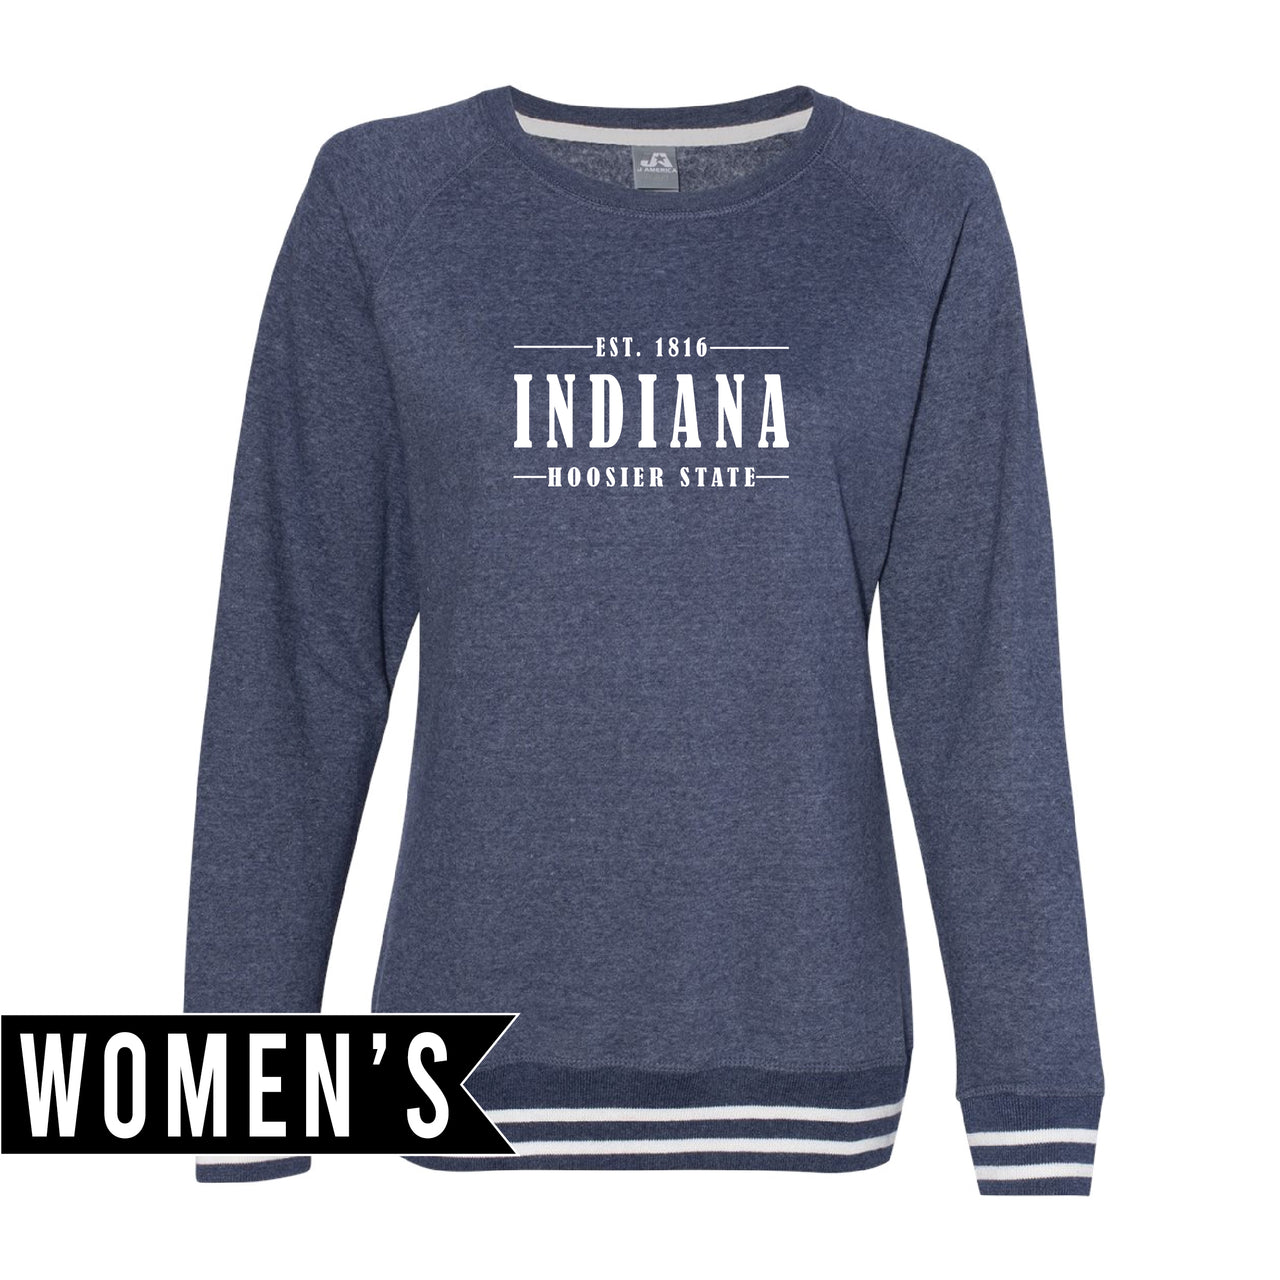 Women’s Relay Crewneck Sweatshirt - Indiana 1816